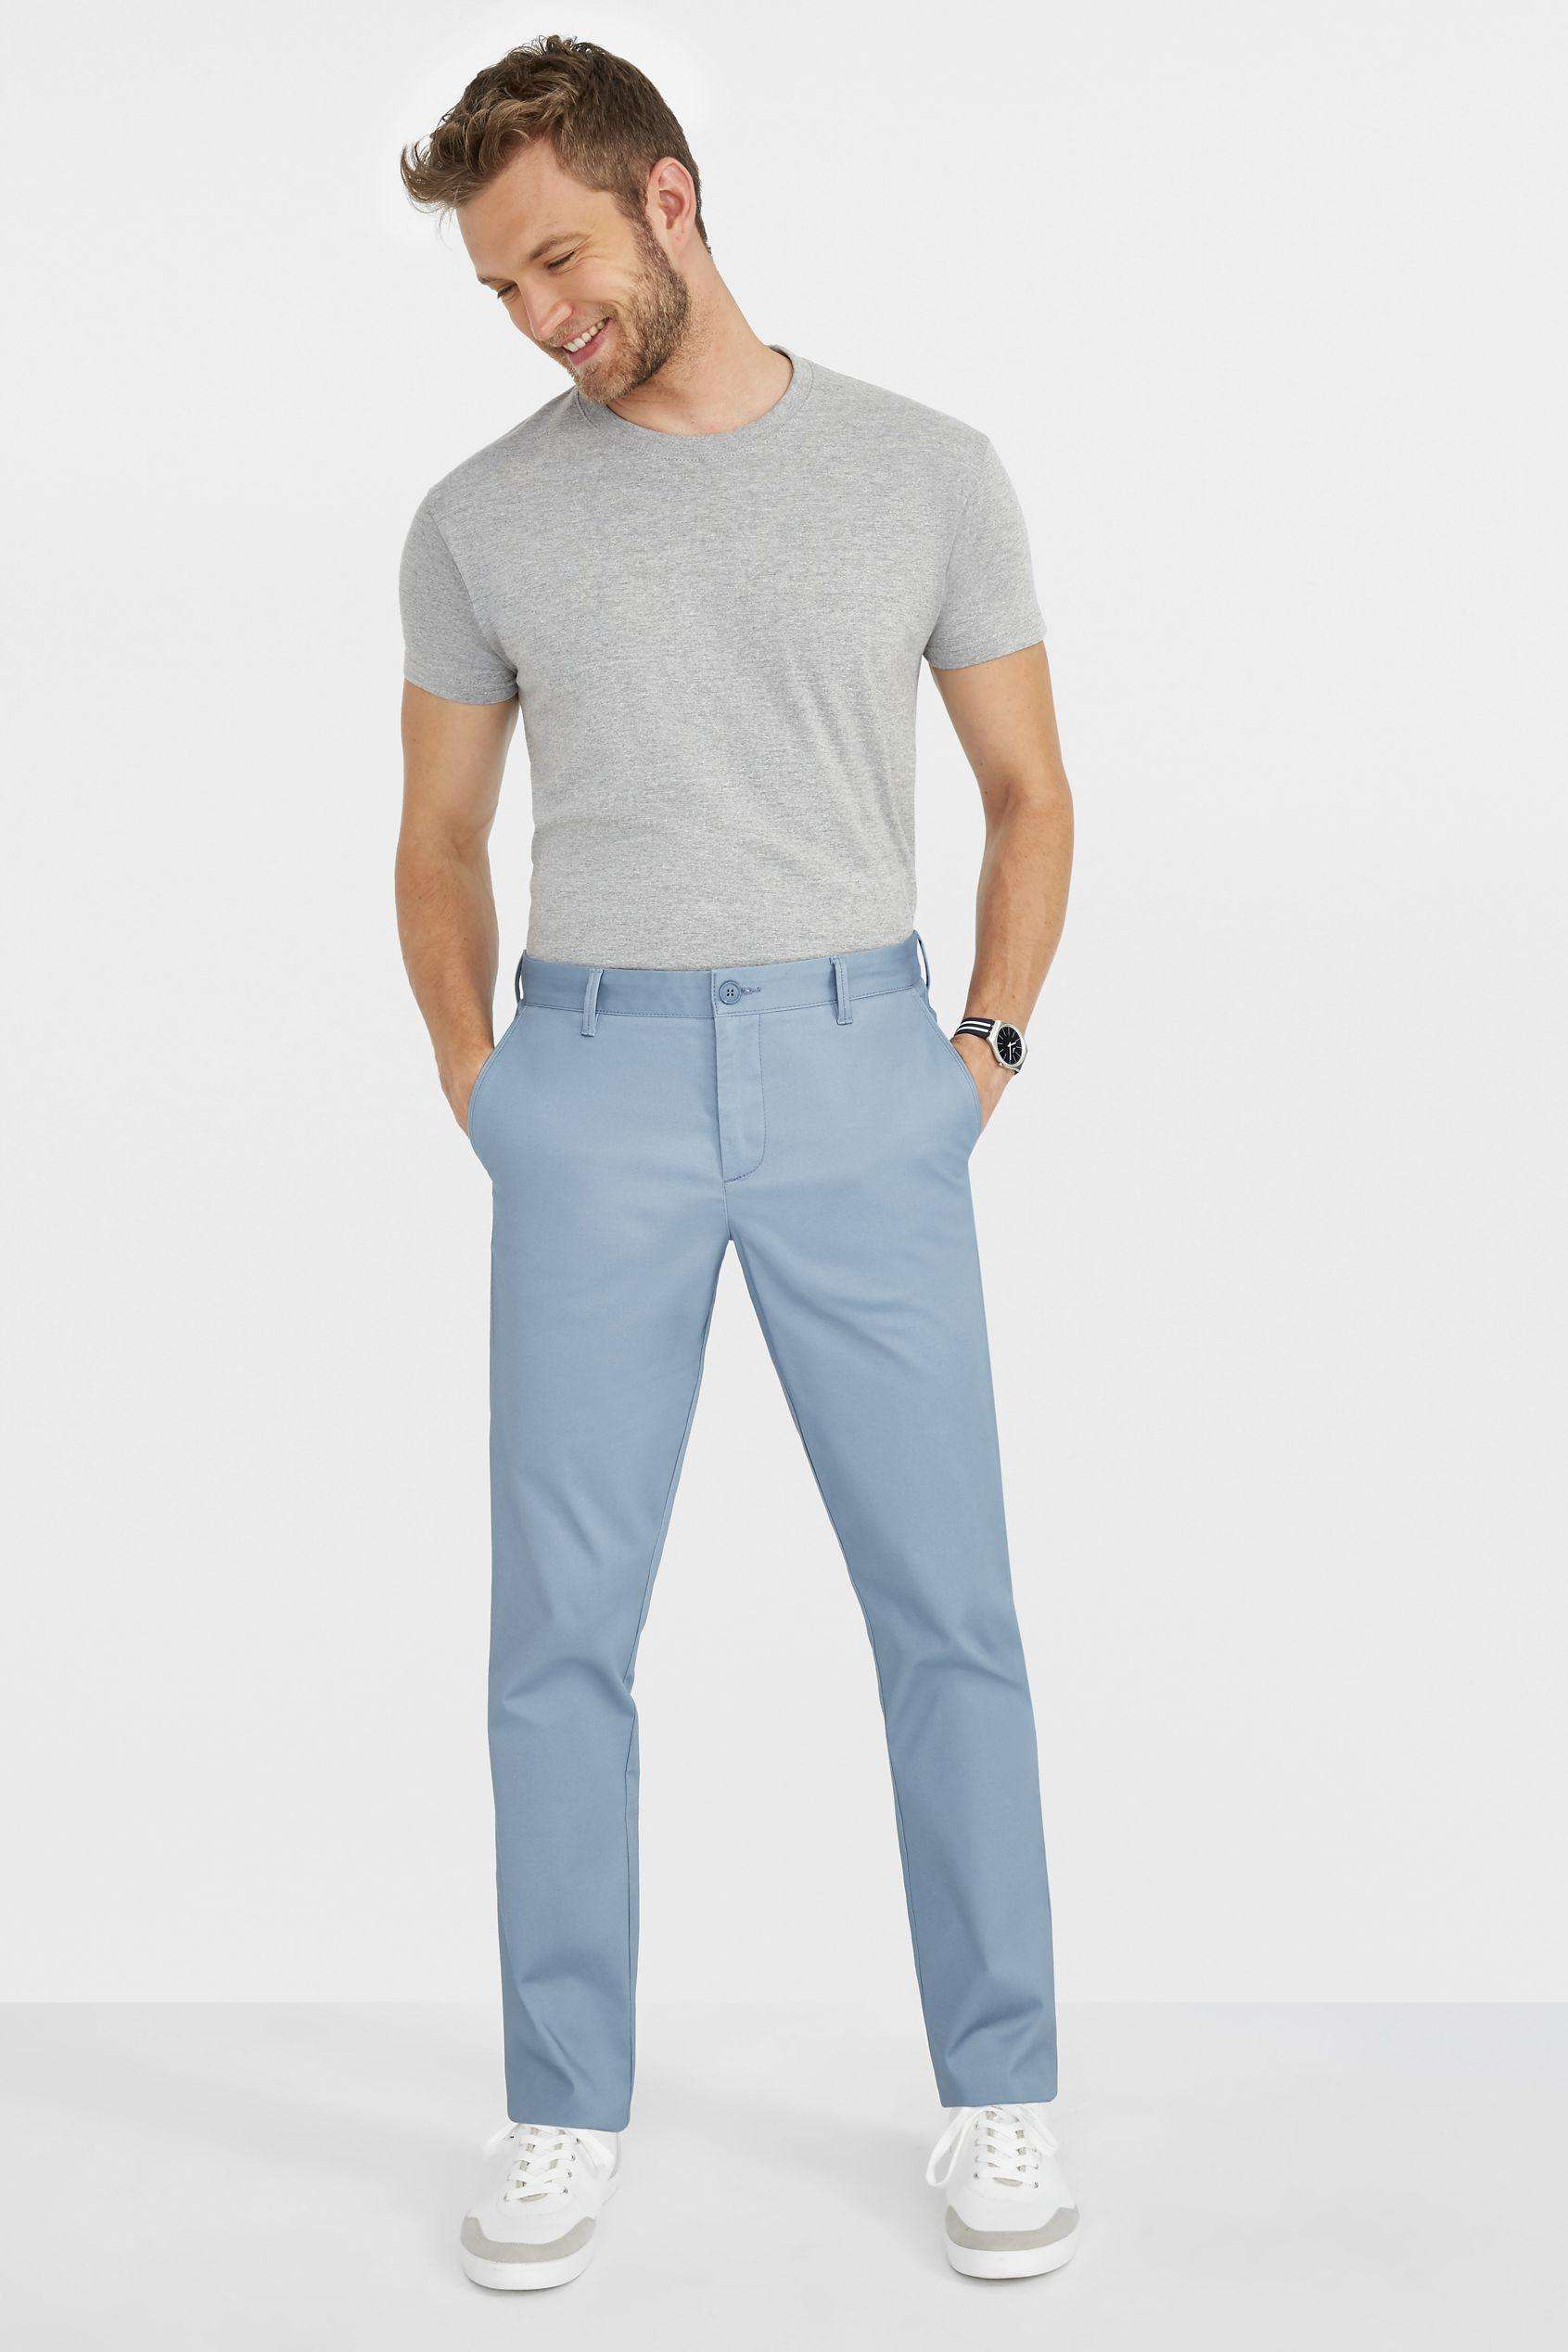 pantalon-uniformidad-azul-hombre